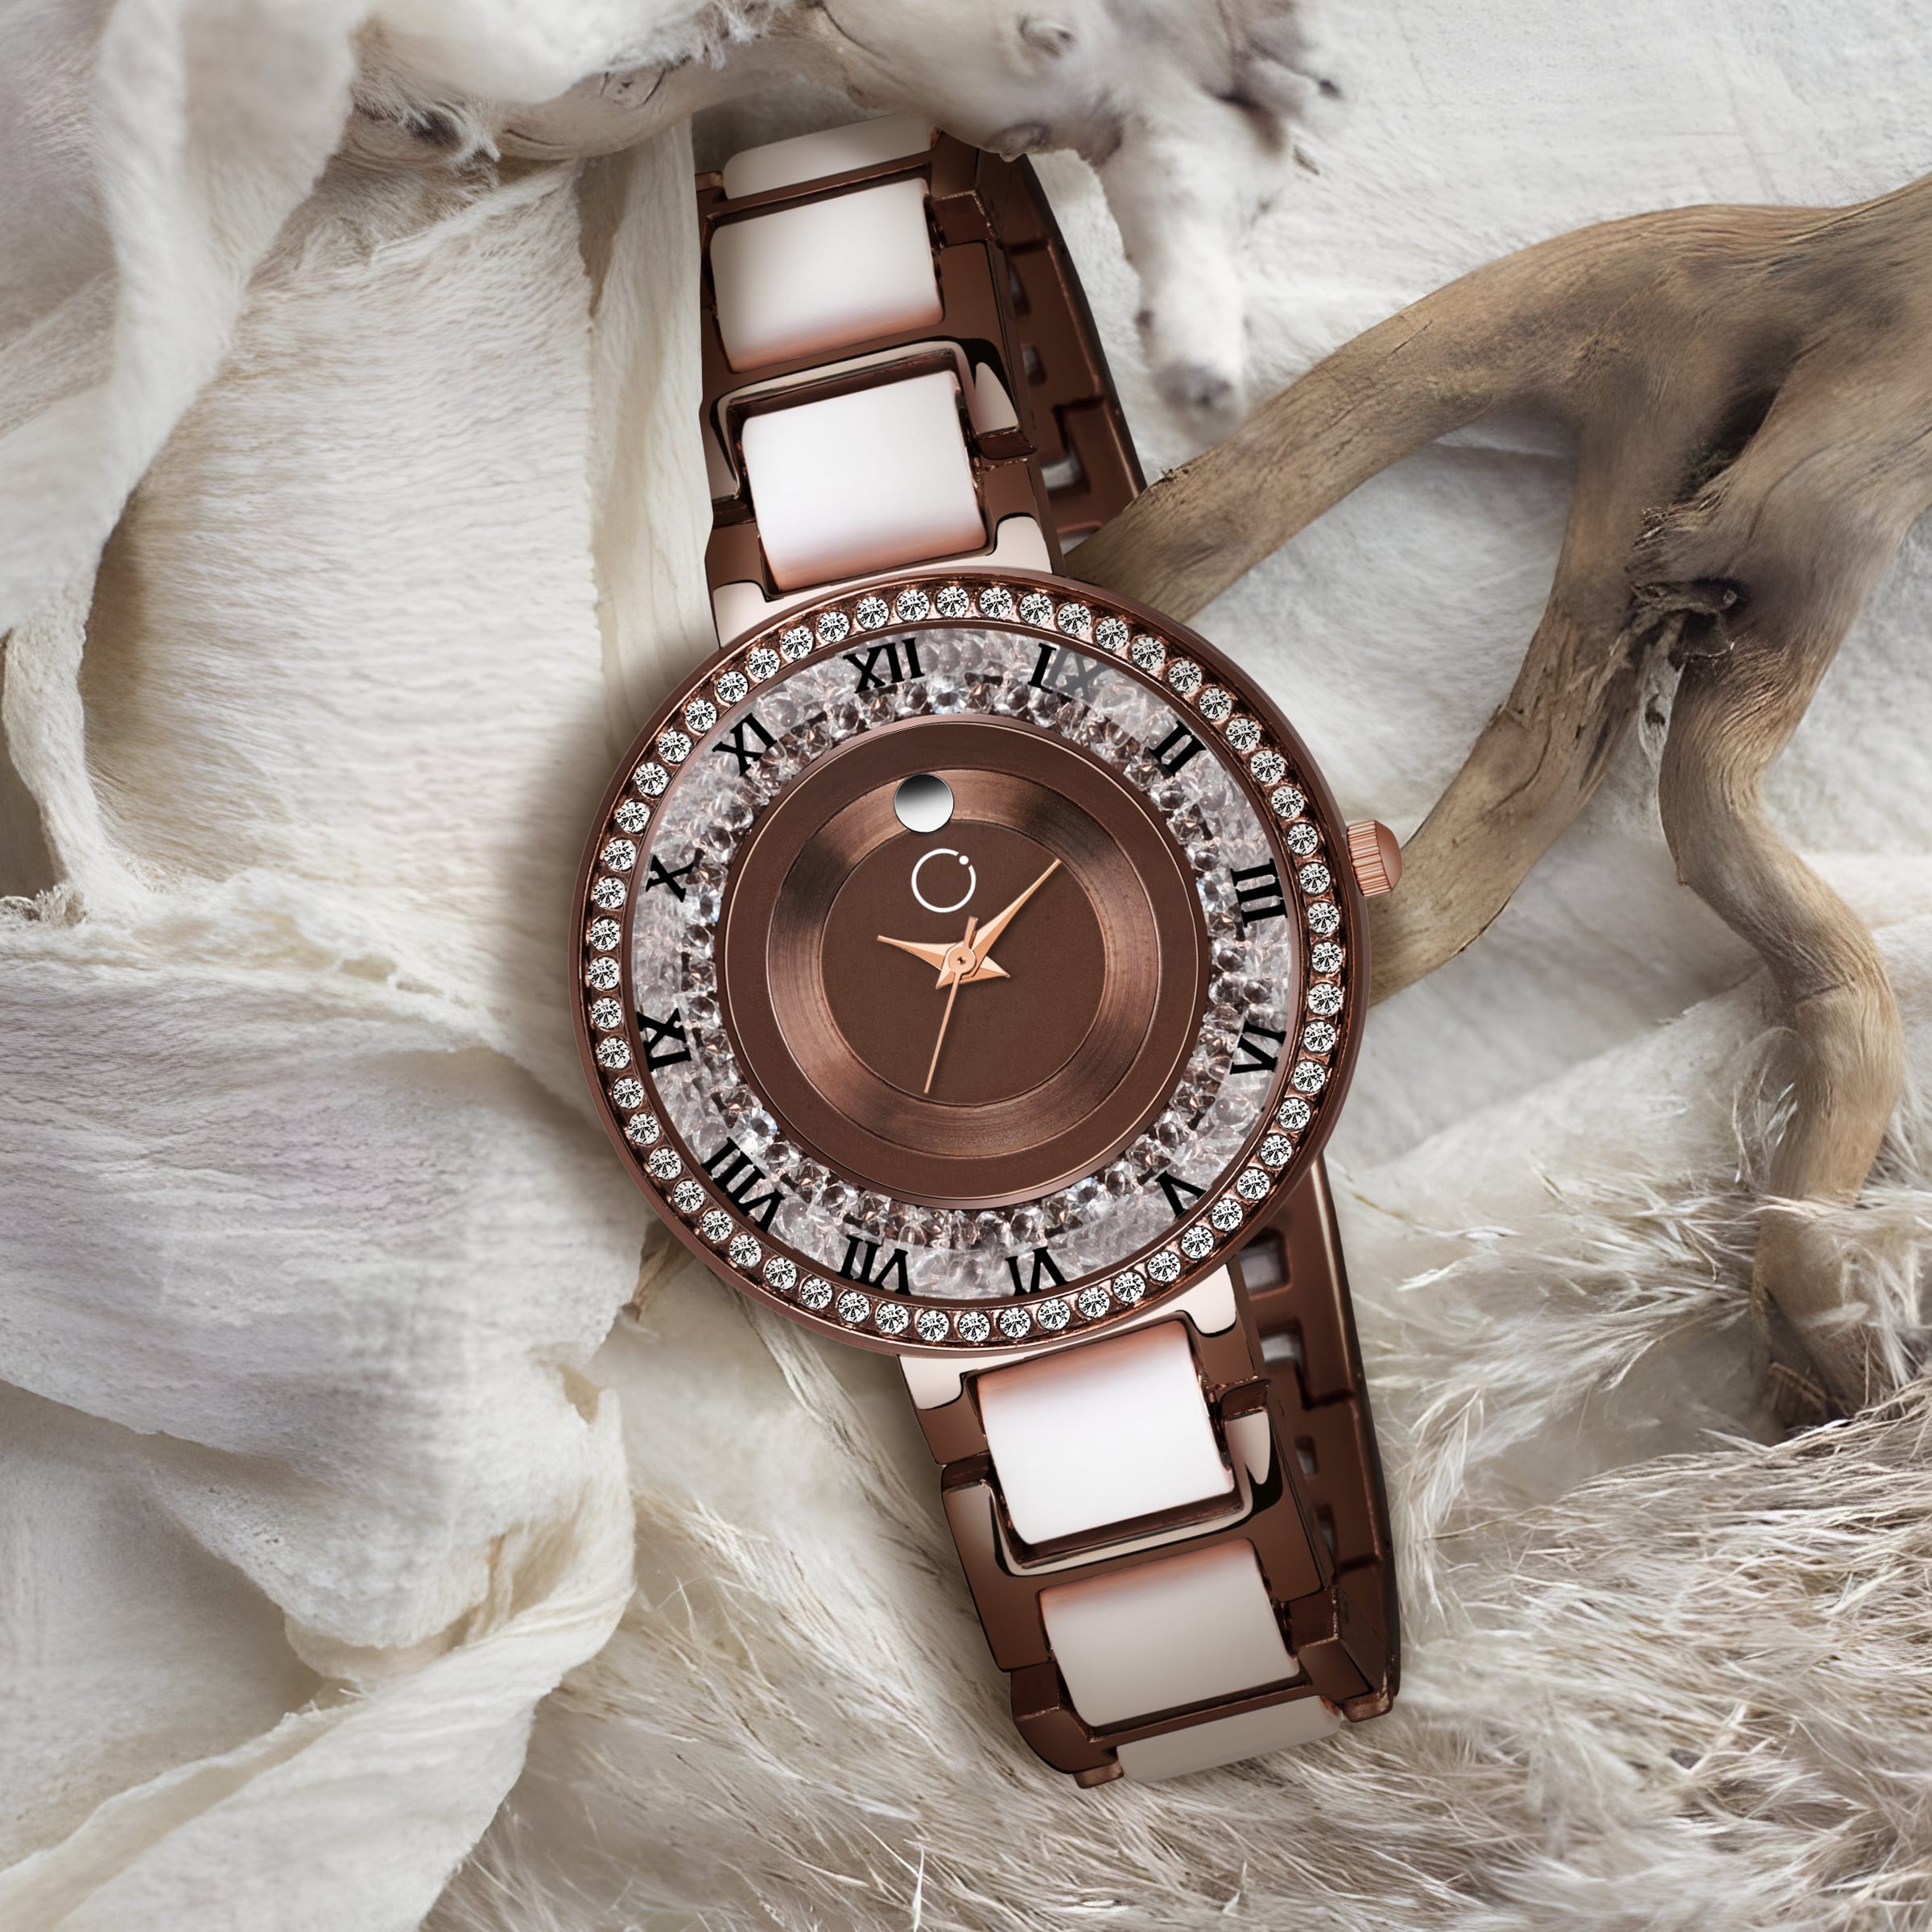 Carlington mova analog women's watch brownwhite